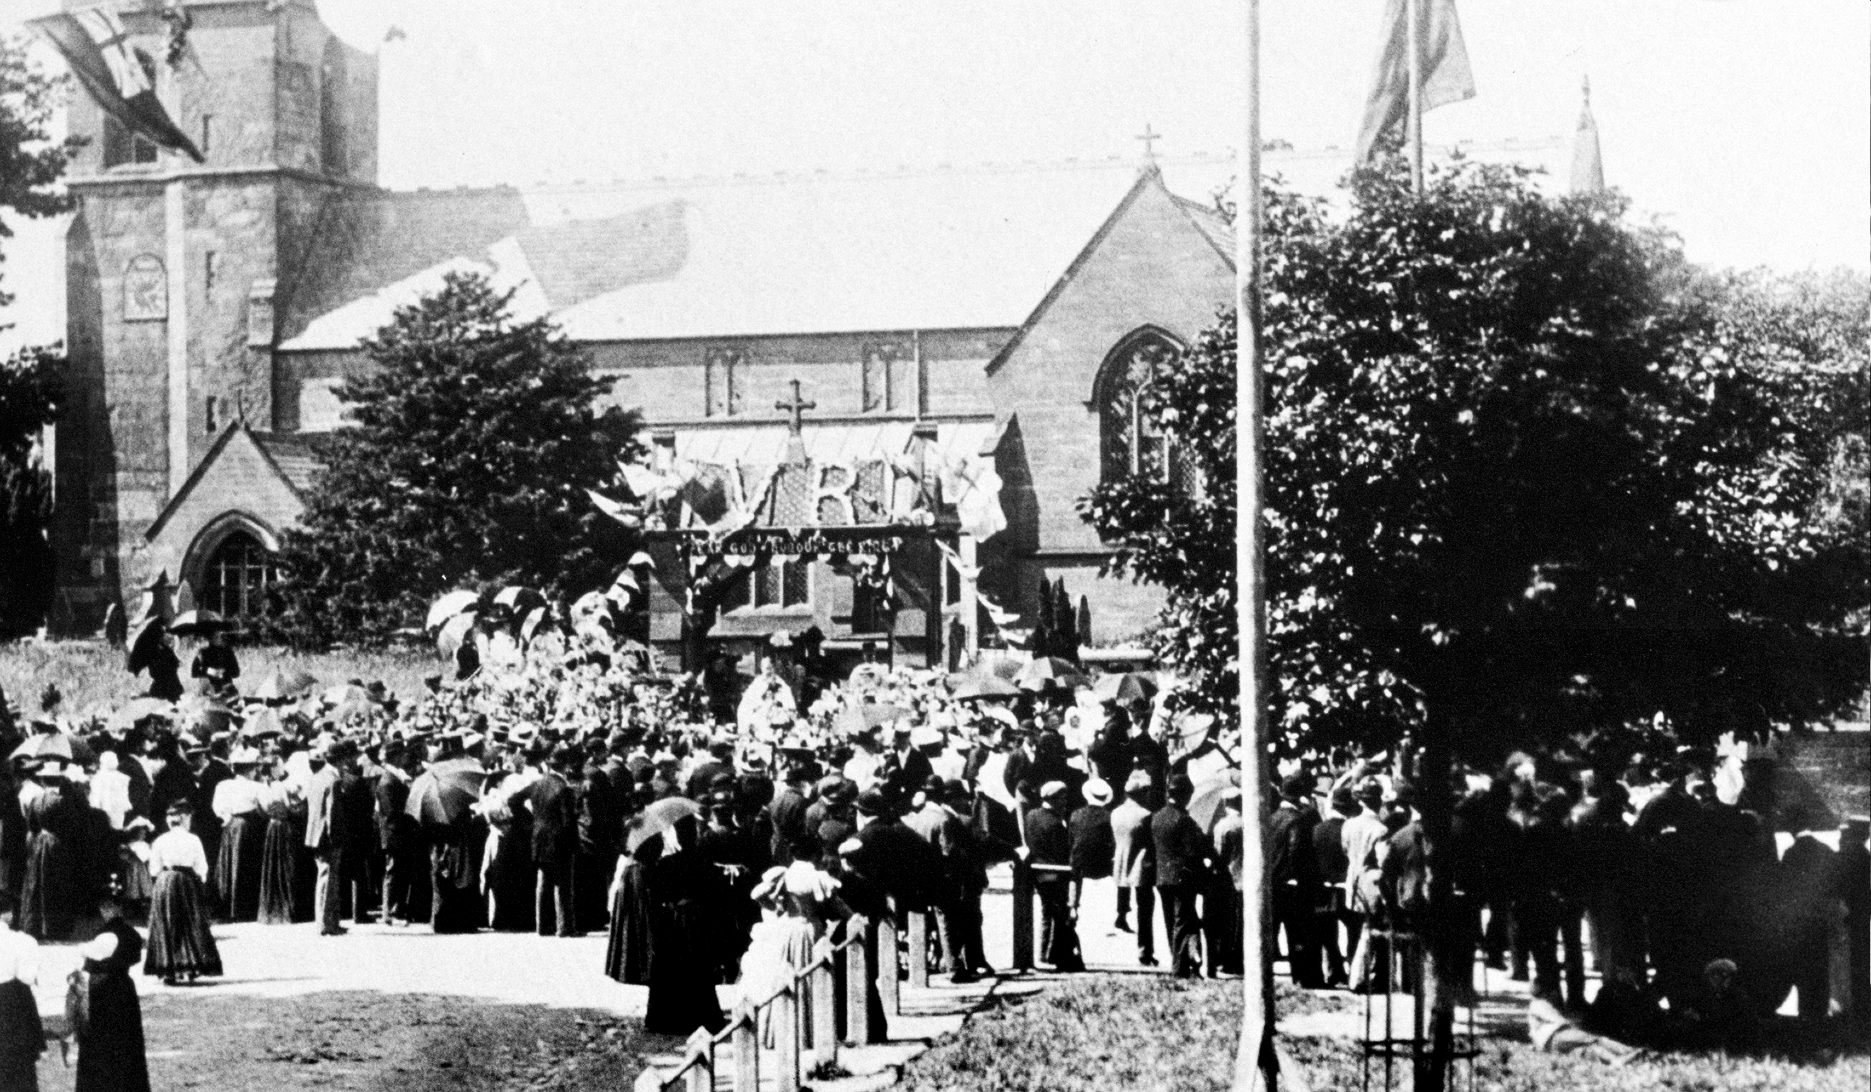 Queen Victoria Jubilee celebration 1897 at Christleton St James